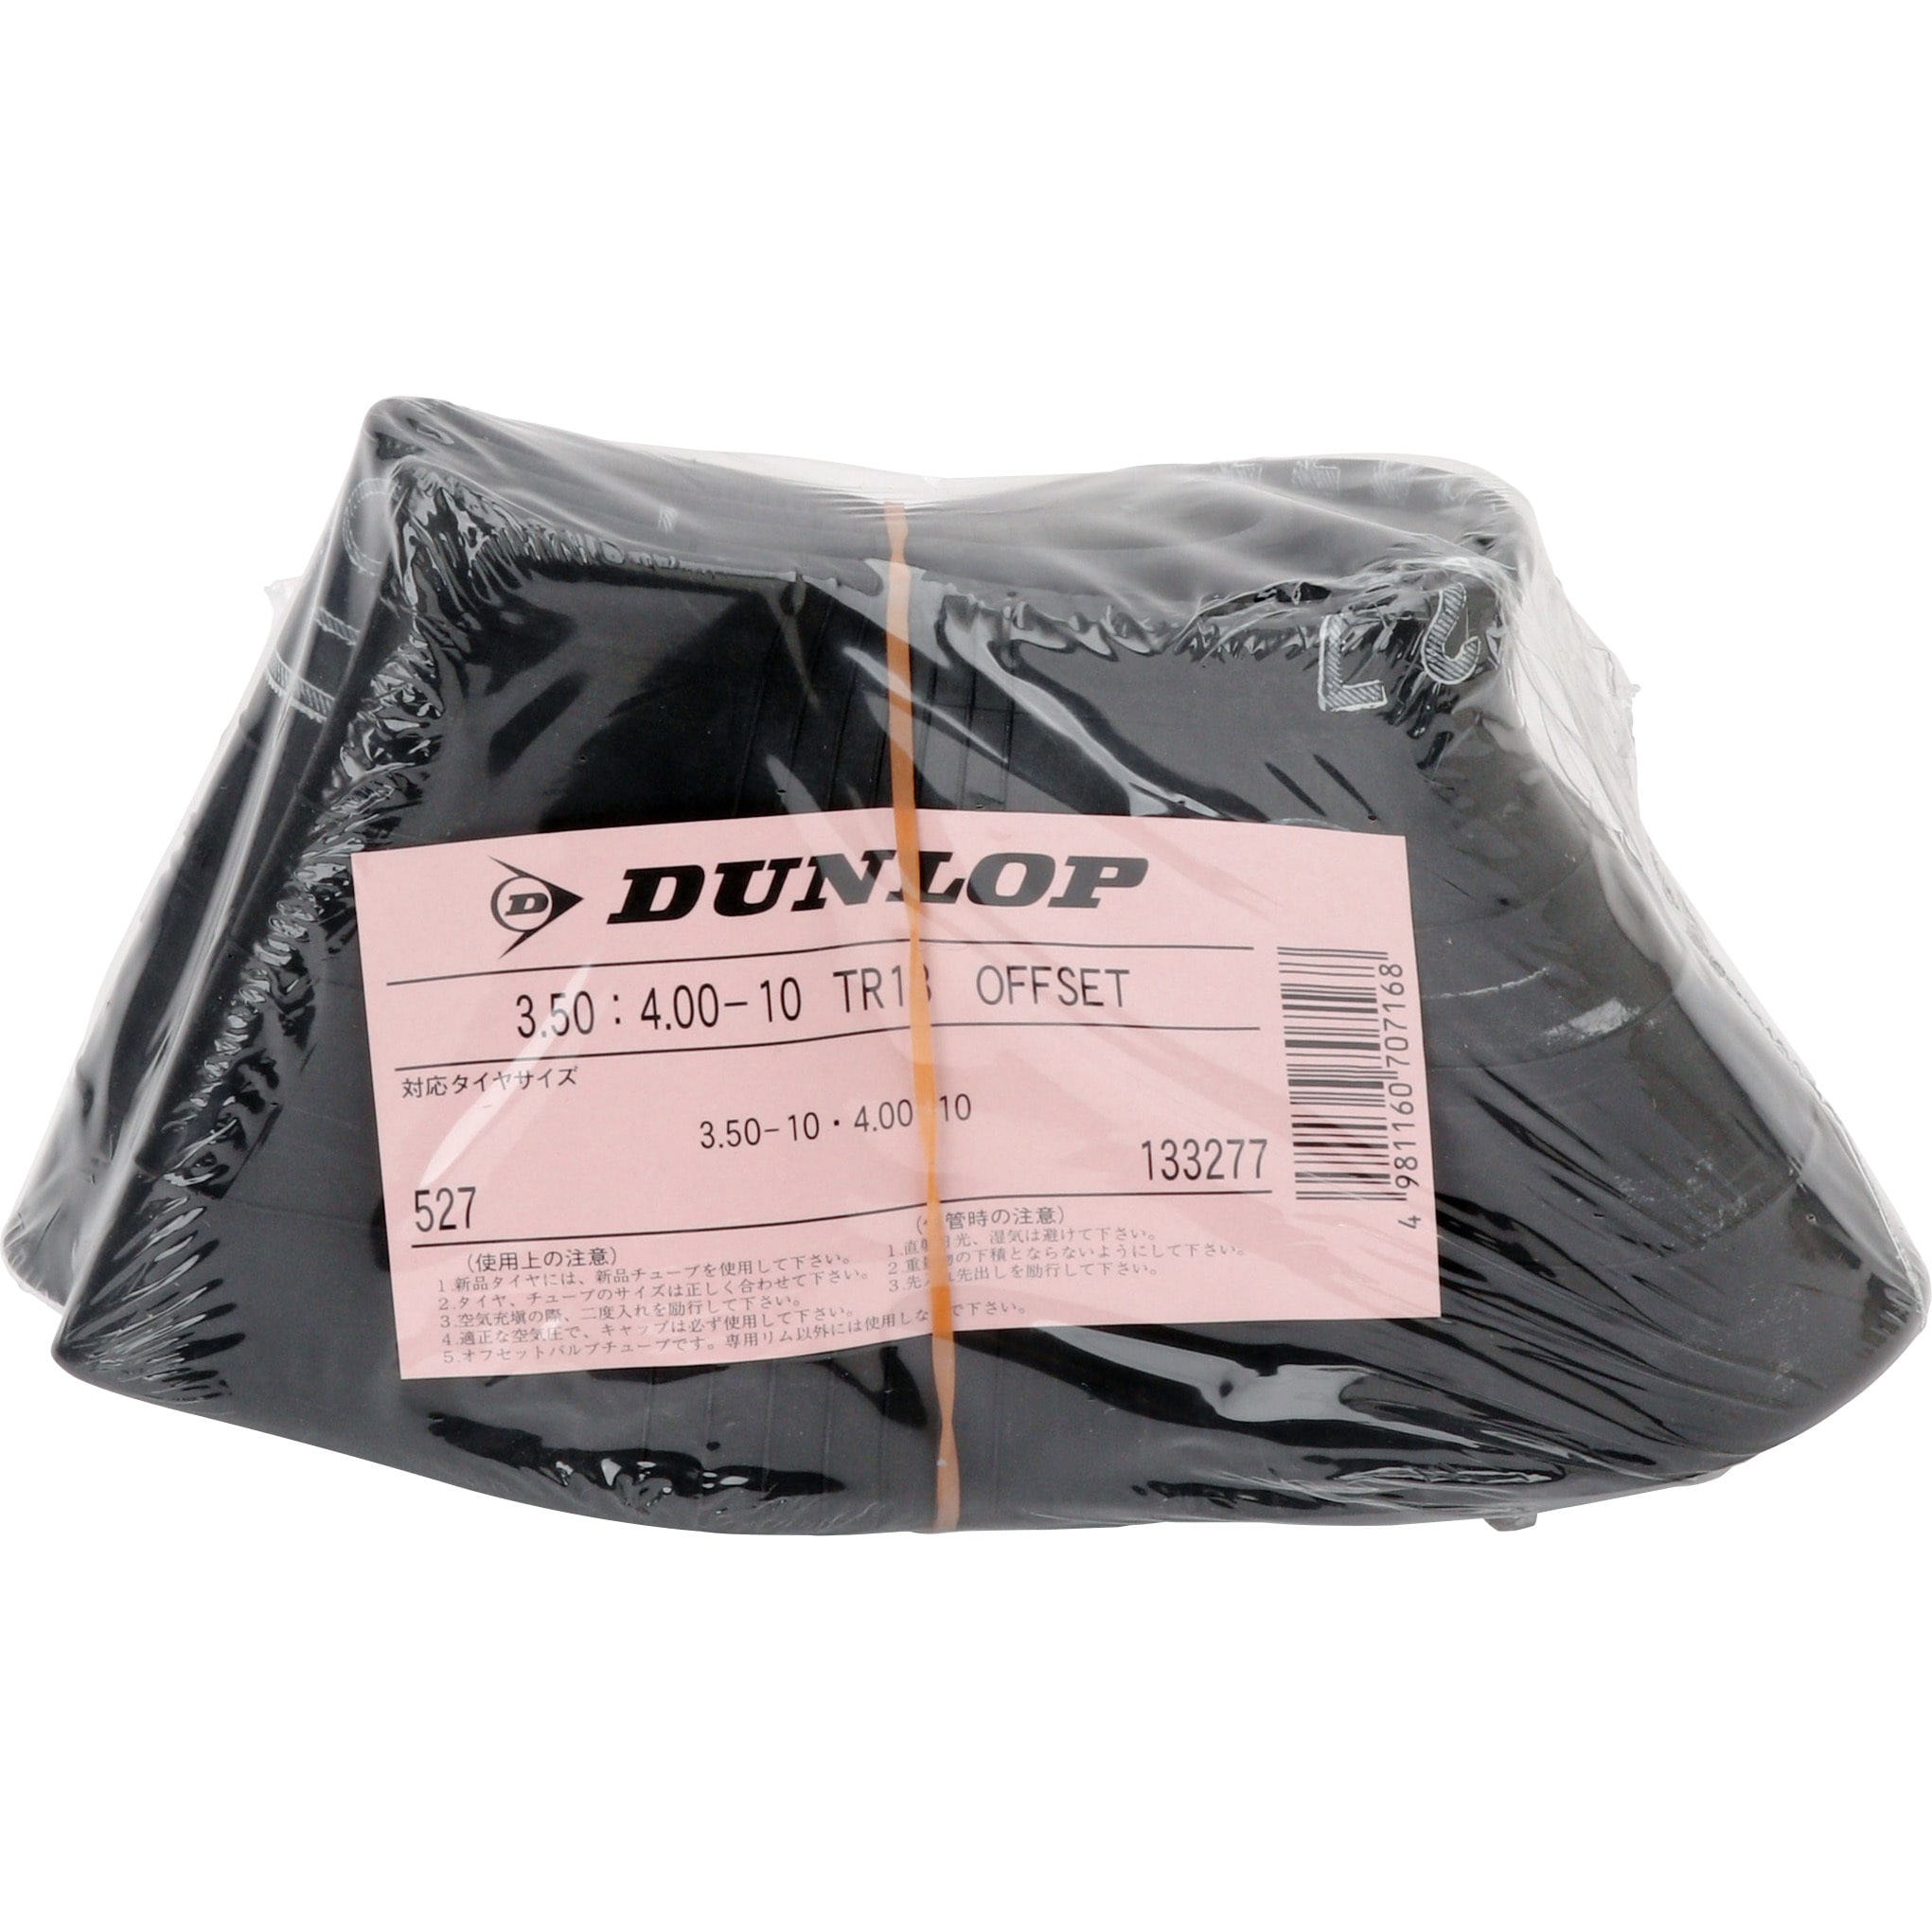 DUNLOP DUNLOP(ダンロップ) バイク タイヤ チューブ 3.50：4.00-10 TR13 133277